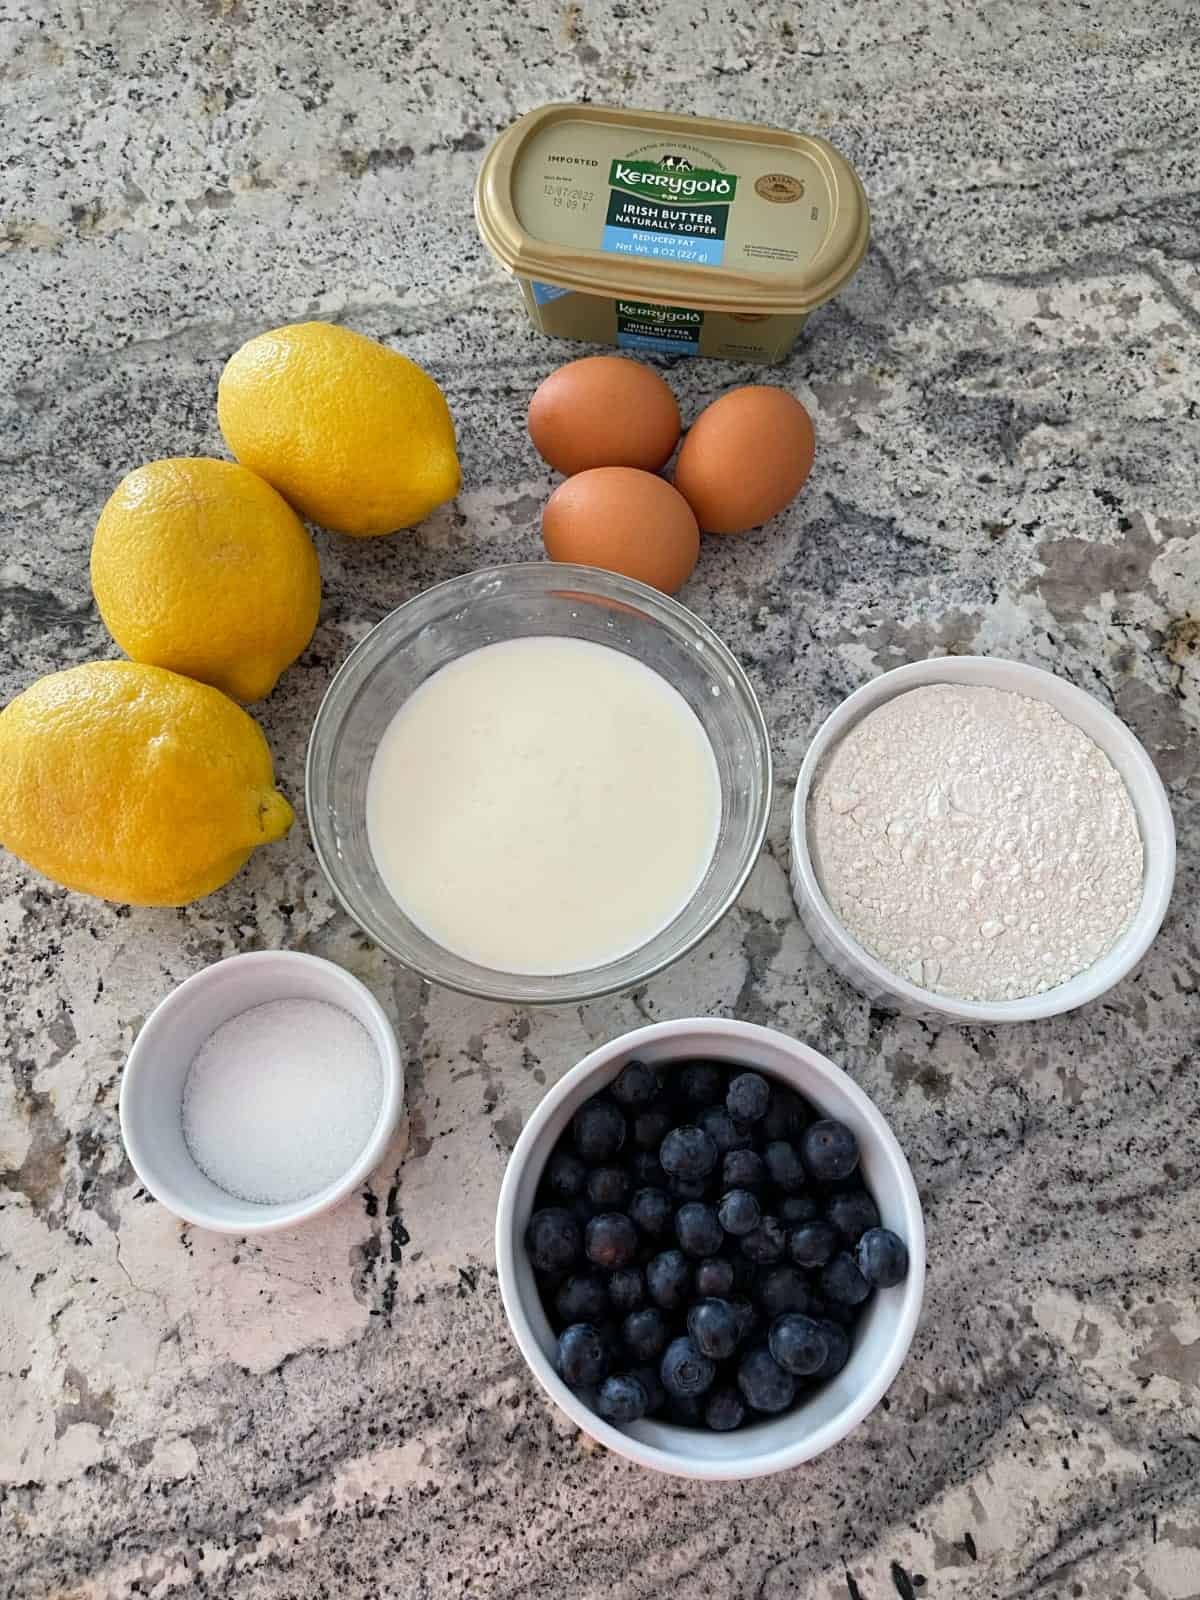 Ingredients including light butter, lemons, eggs, buttermilk, flour, blueberries and Truvia sweetener on granite.